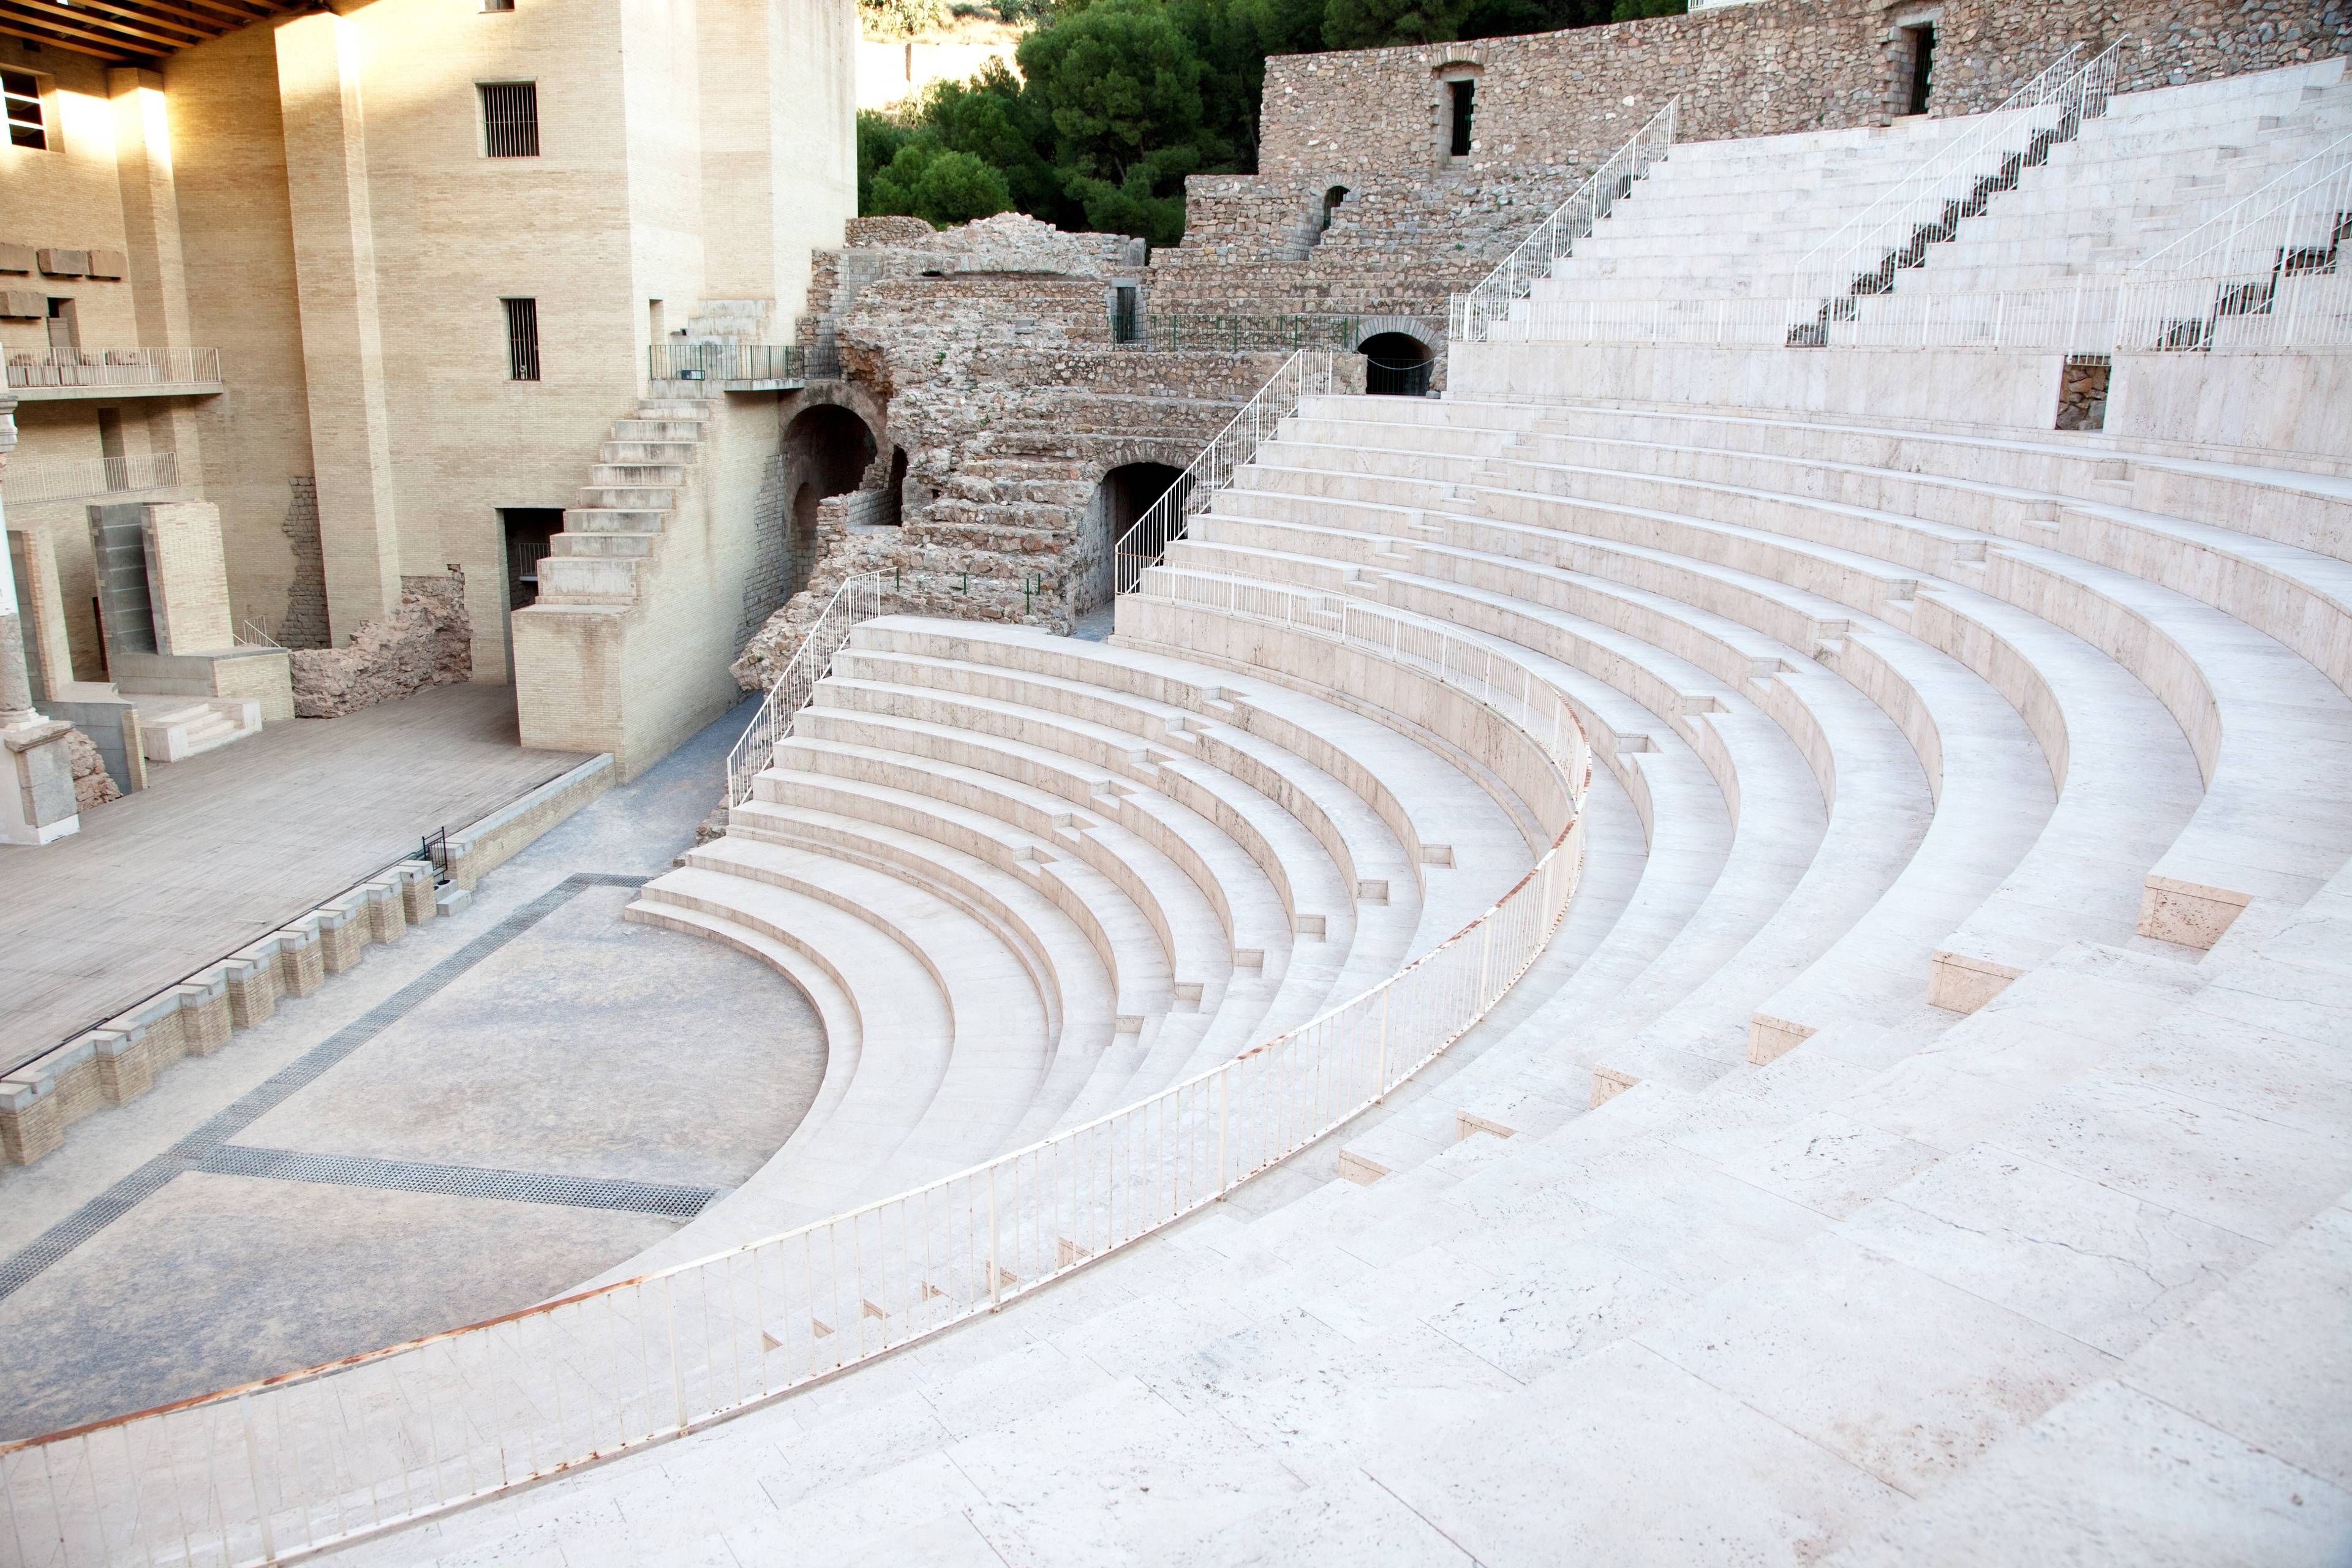 Roman Theatre of Sagunto